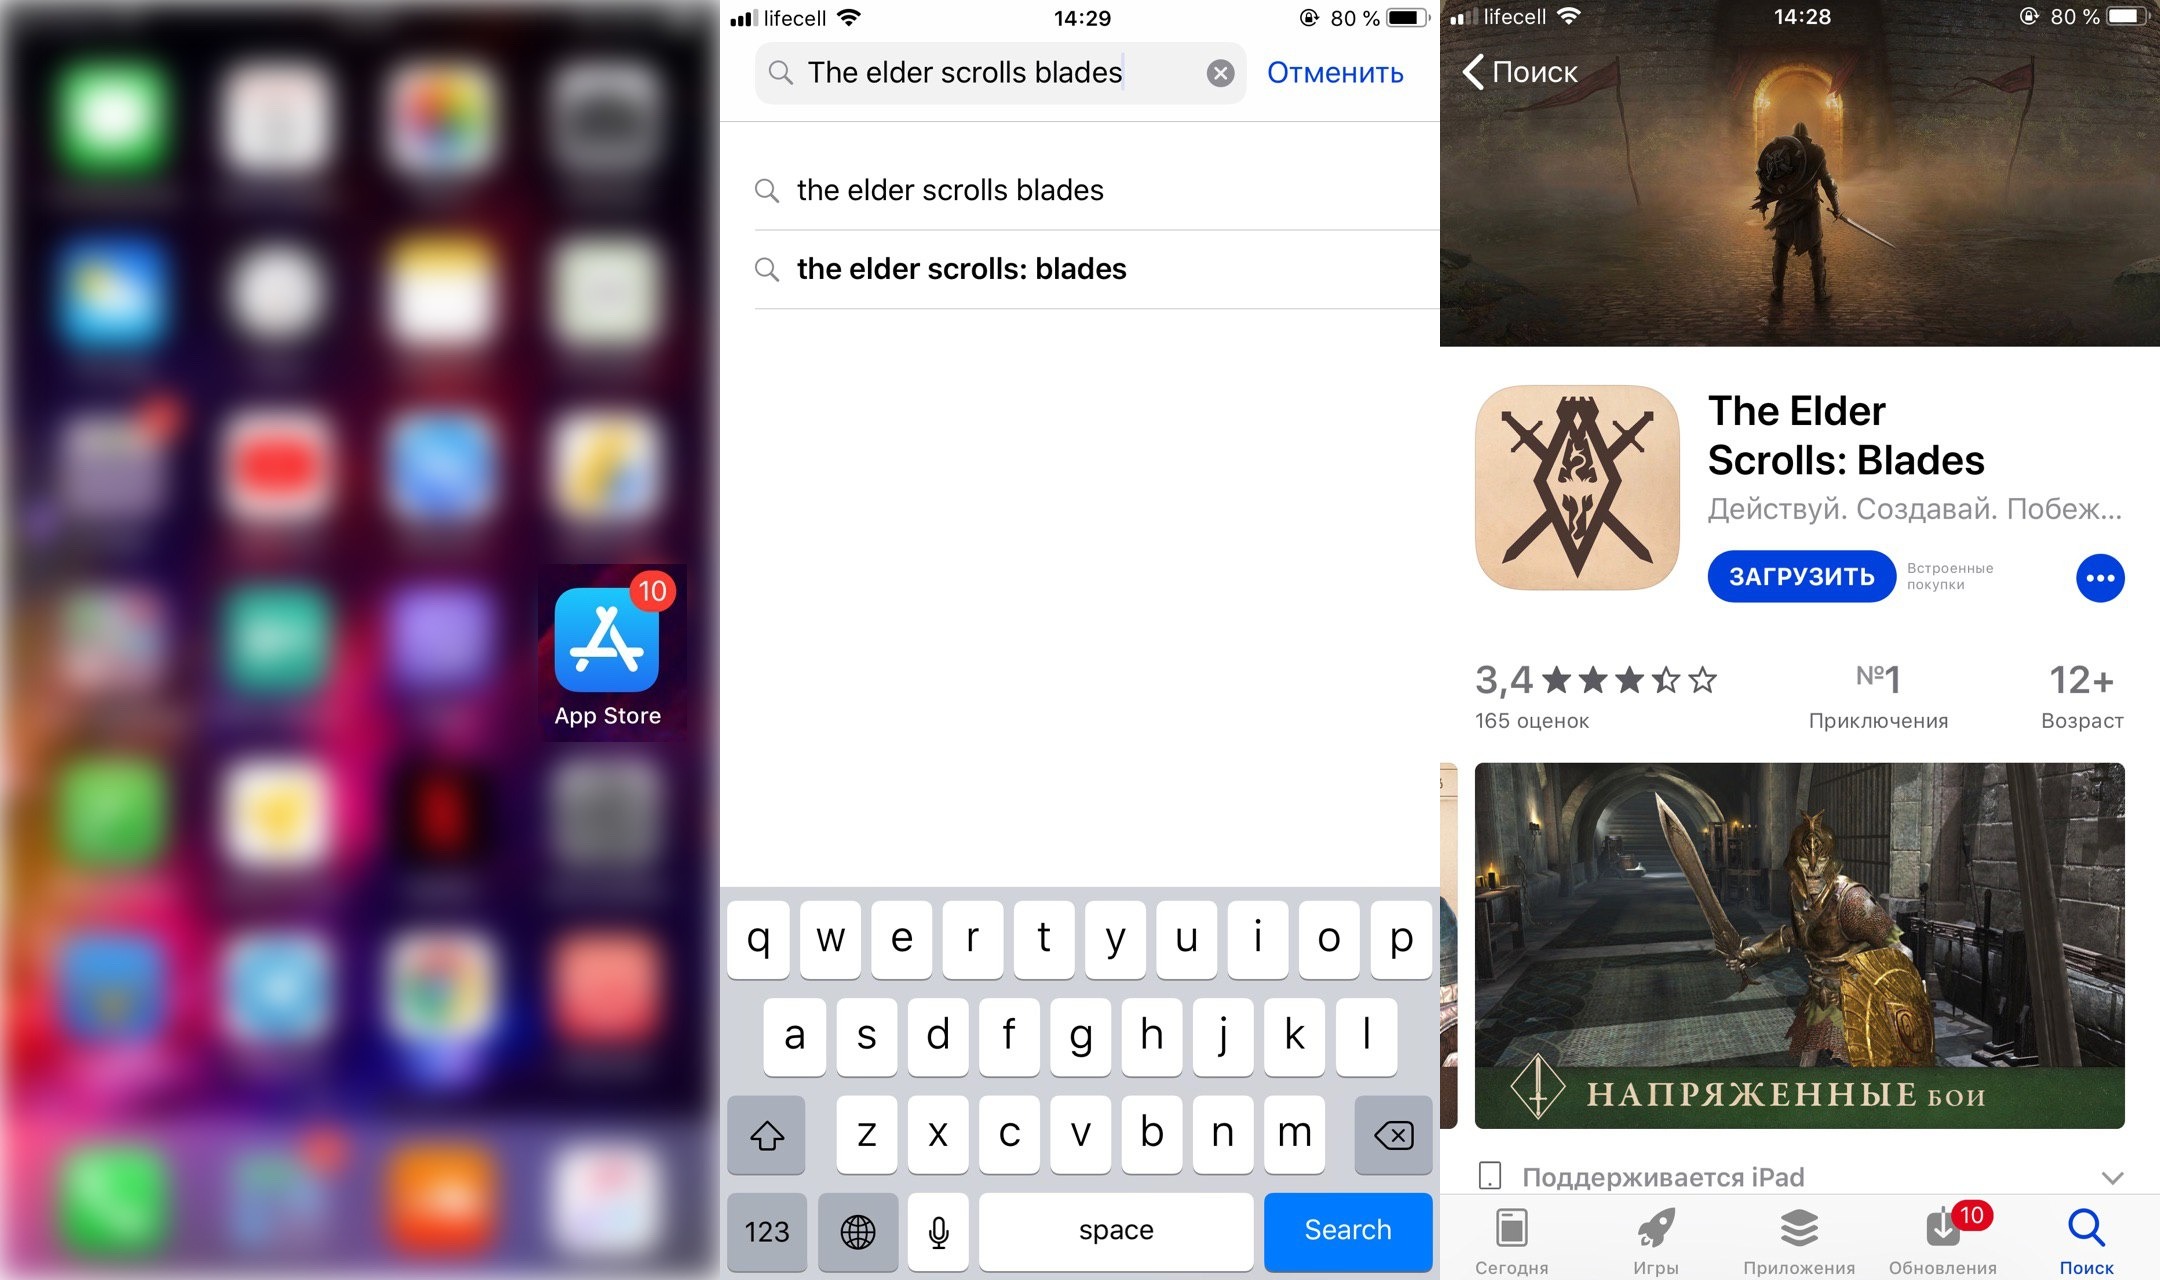 App Store - The Elder Scrolls Blades - Загрузить